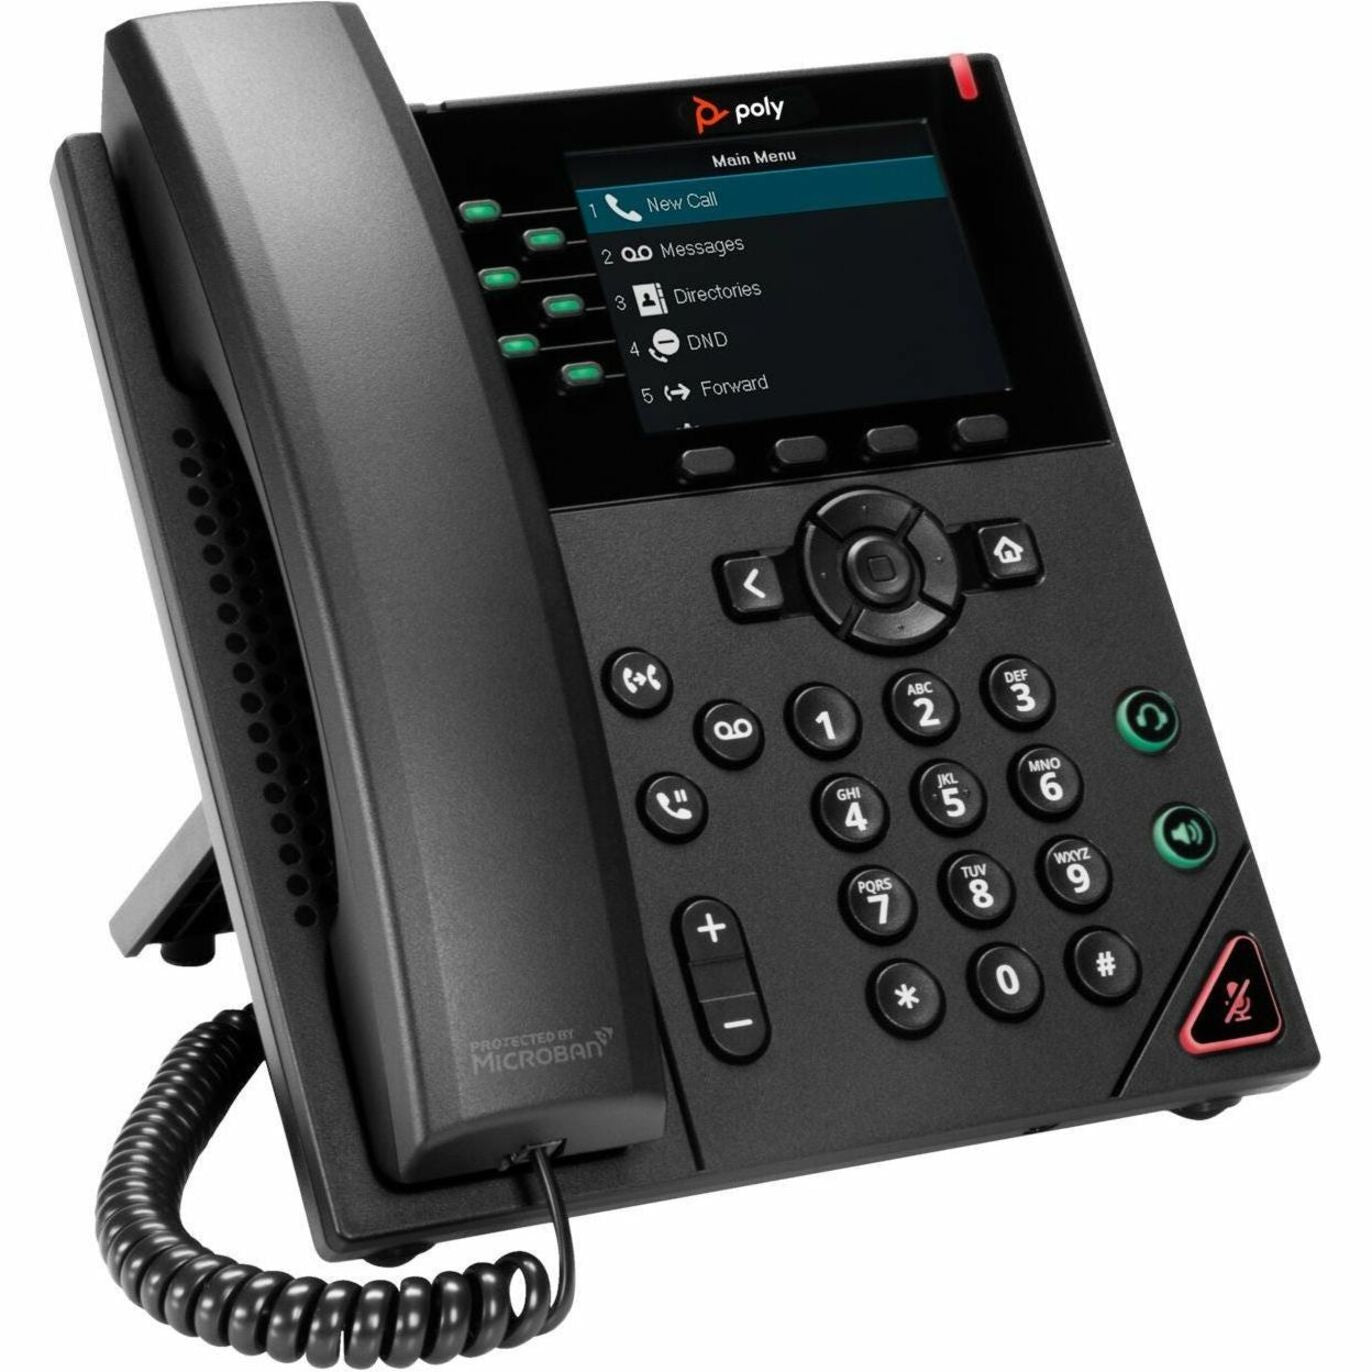 Poly VVX 350 IP Phone, 6-Line, PoE-Enabled, Black